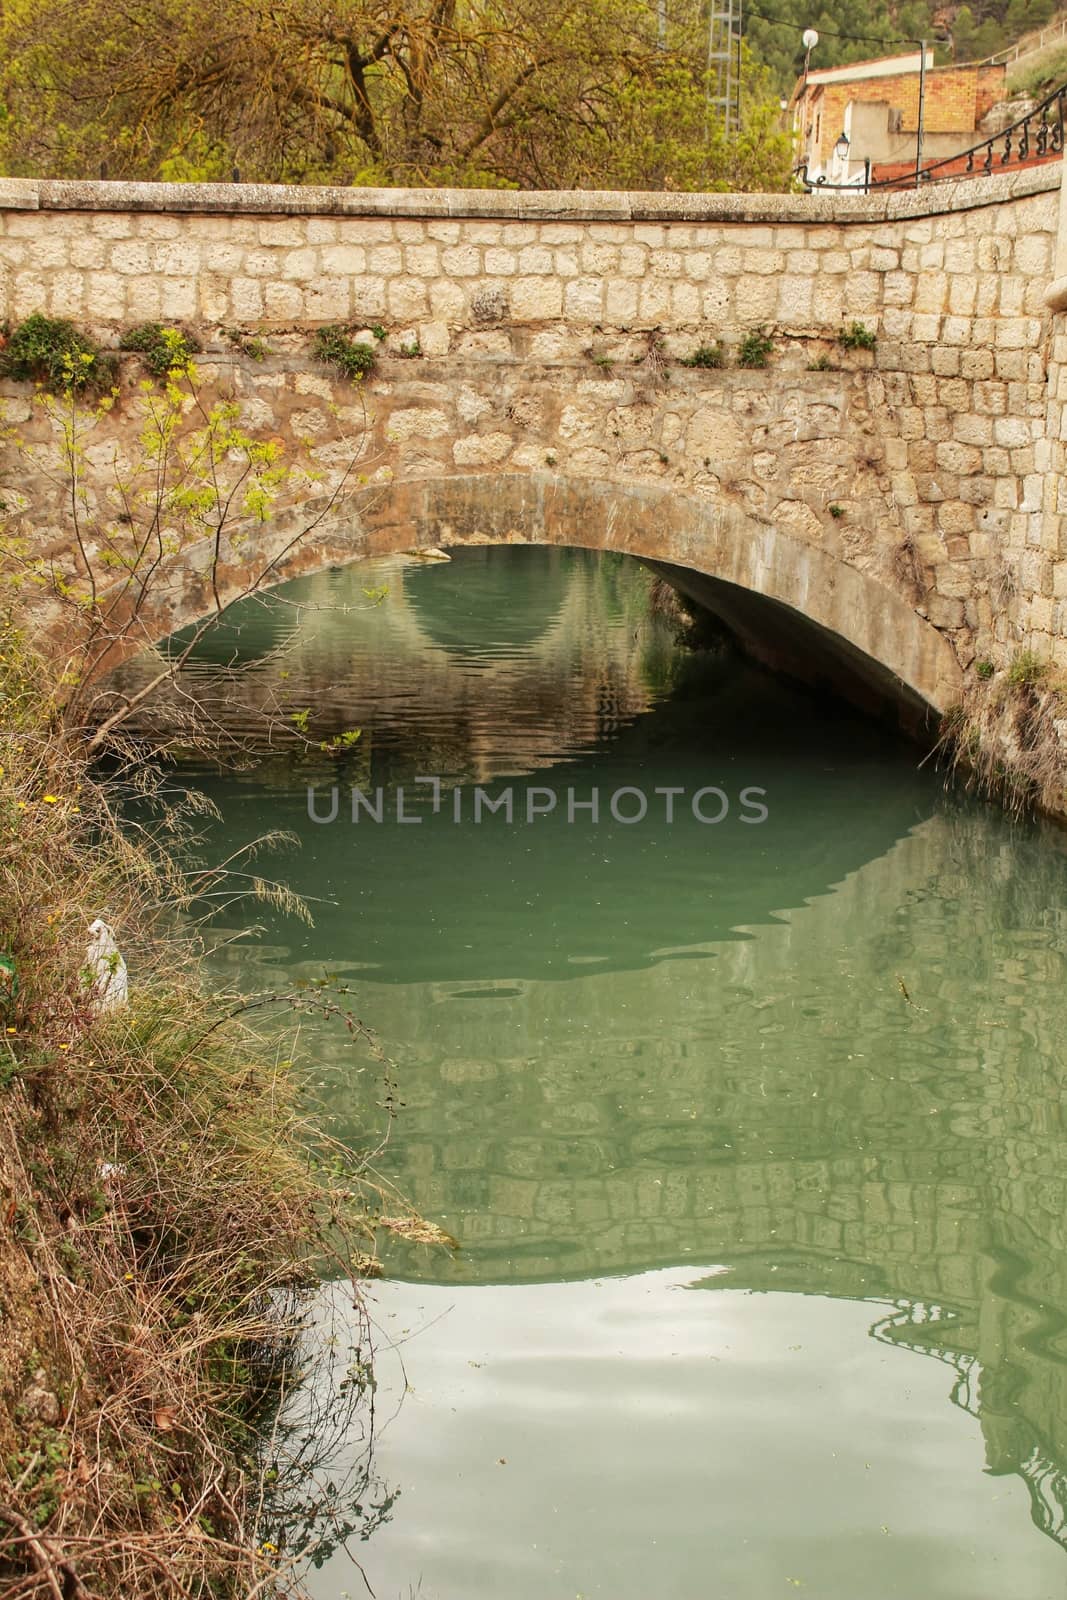 Stone bridge and the Jucar River in Alcala del Jucar village by soniabonet